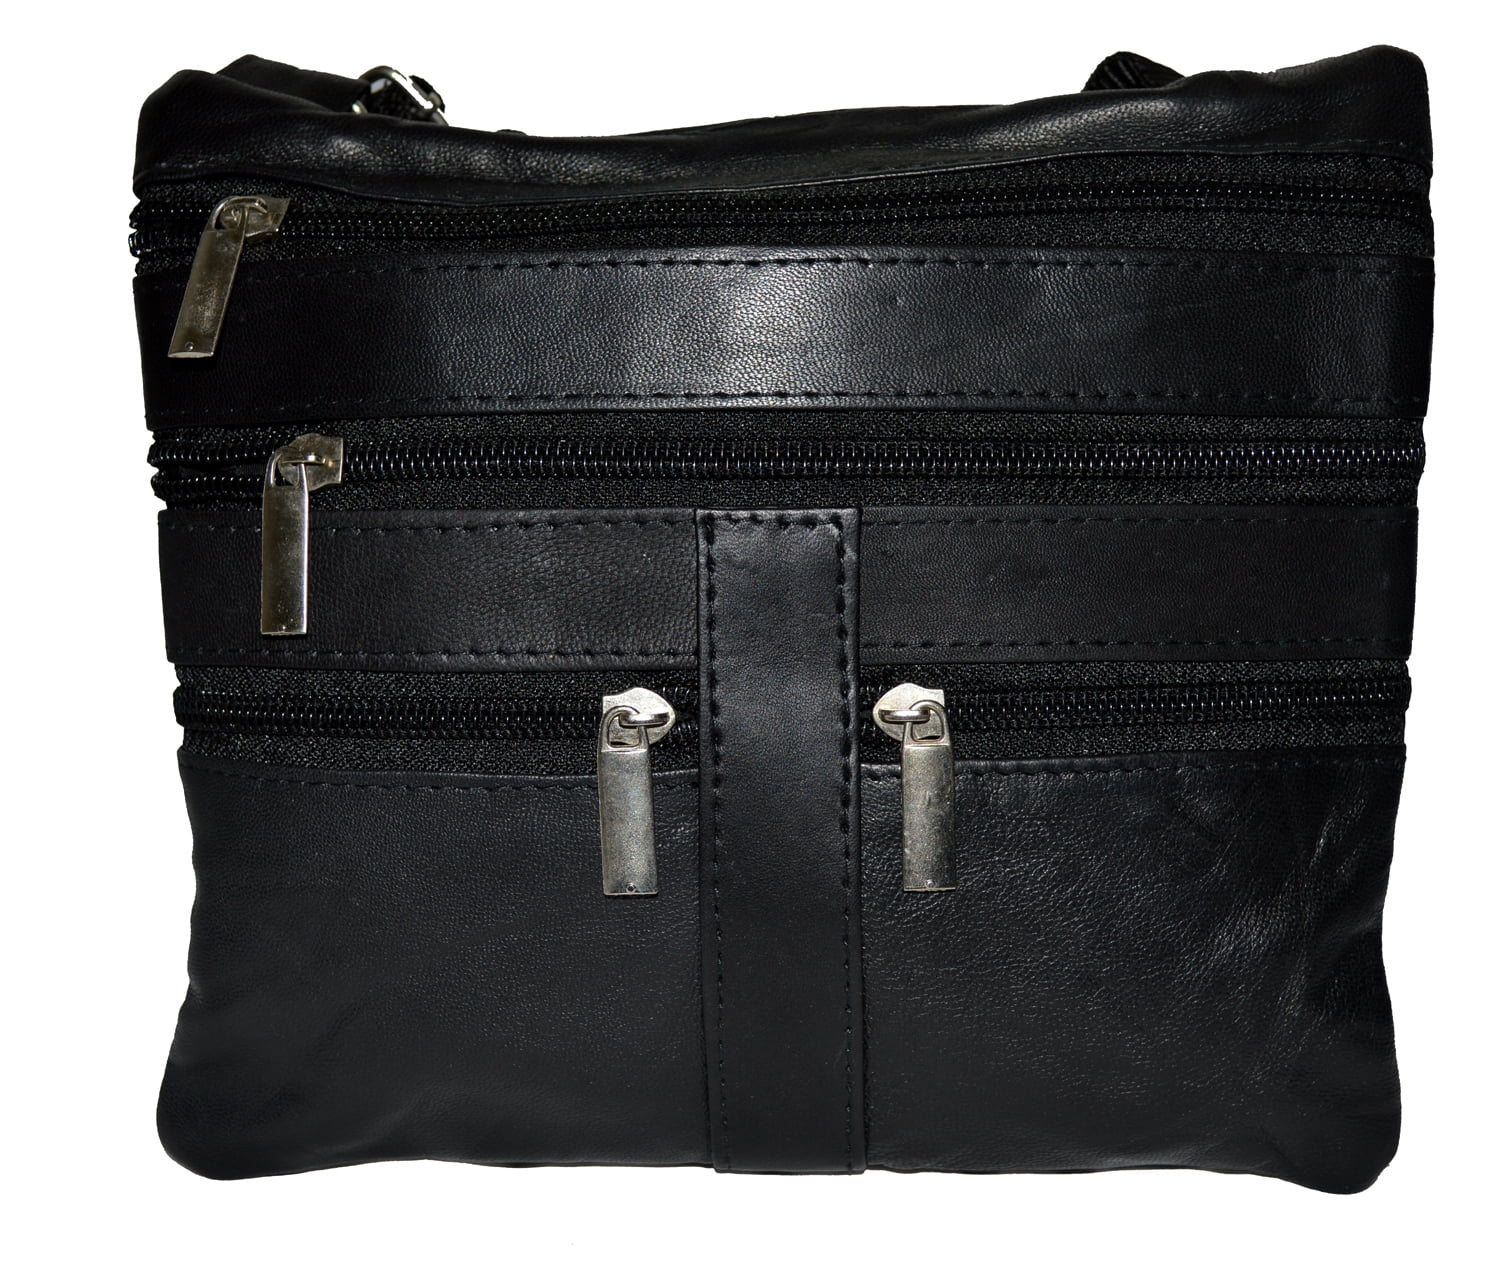 Leatherboss - Soft Leather Cross Body Bag Purse Shoulder Bag 5 Pocket Organizer Handbag Travel ...